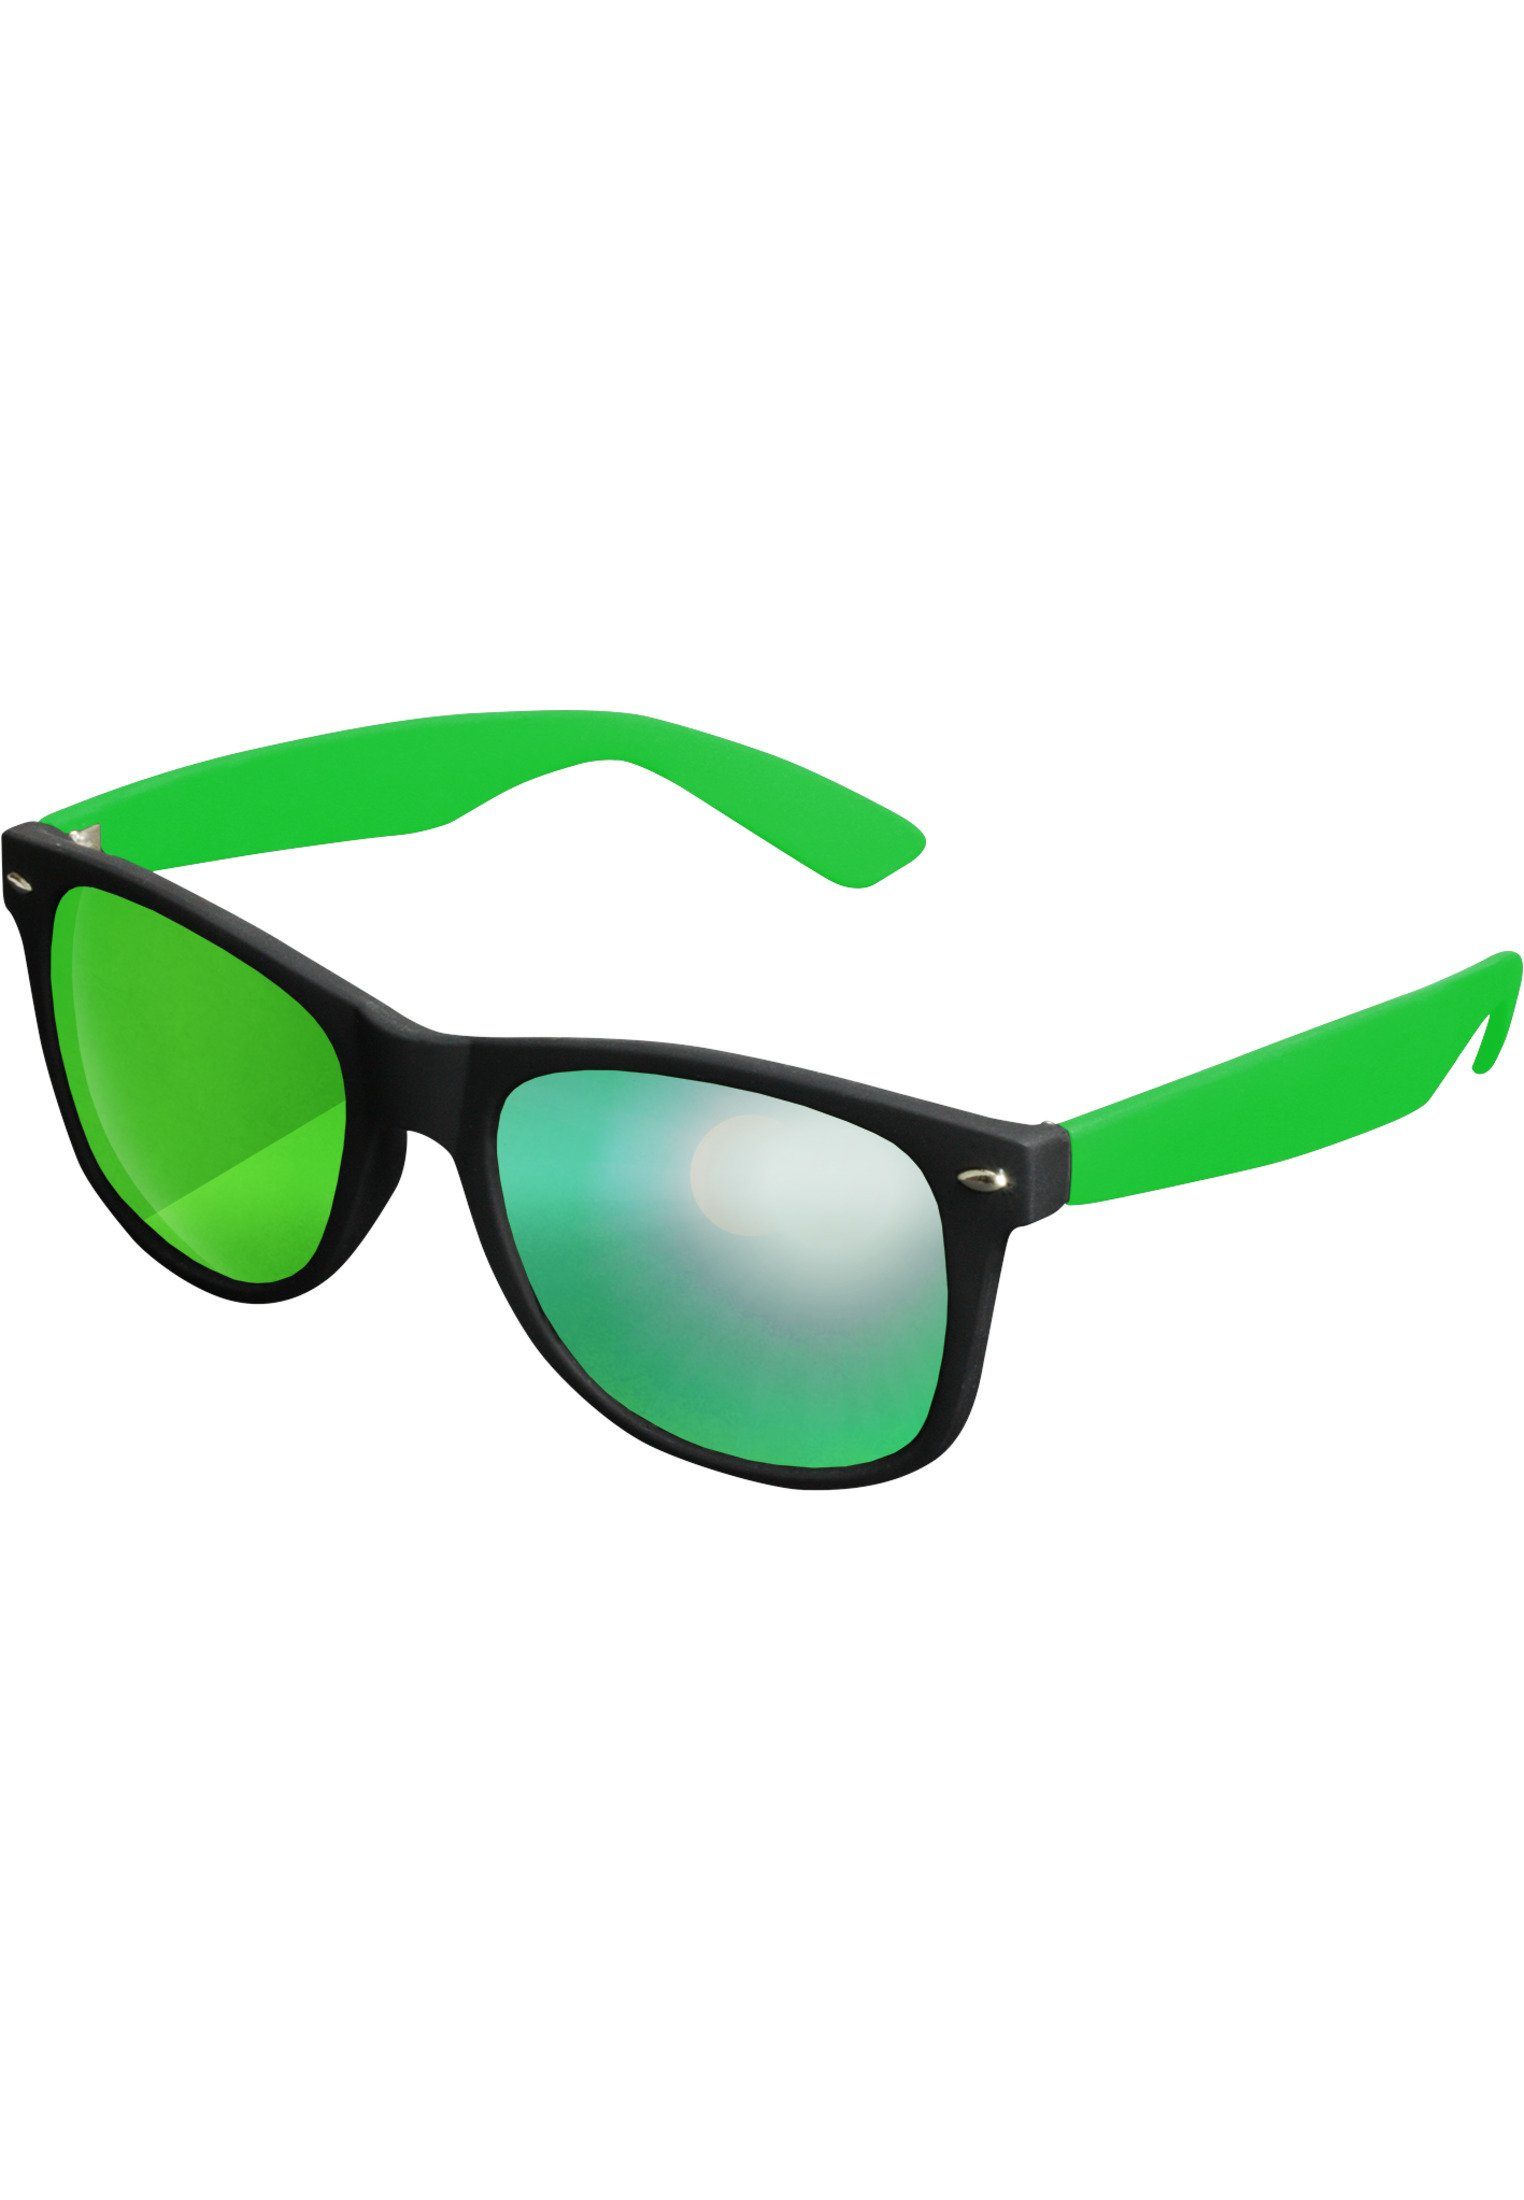 Likoma Accessoires blk/lgr Sunglasses Mirror MSTRDS Sonnenbrille